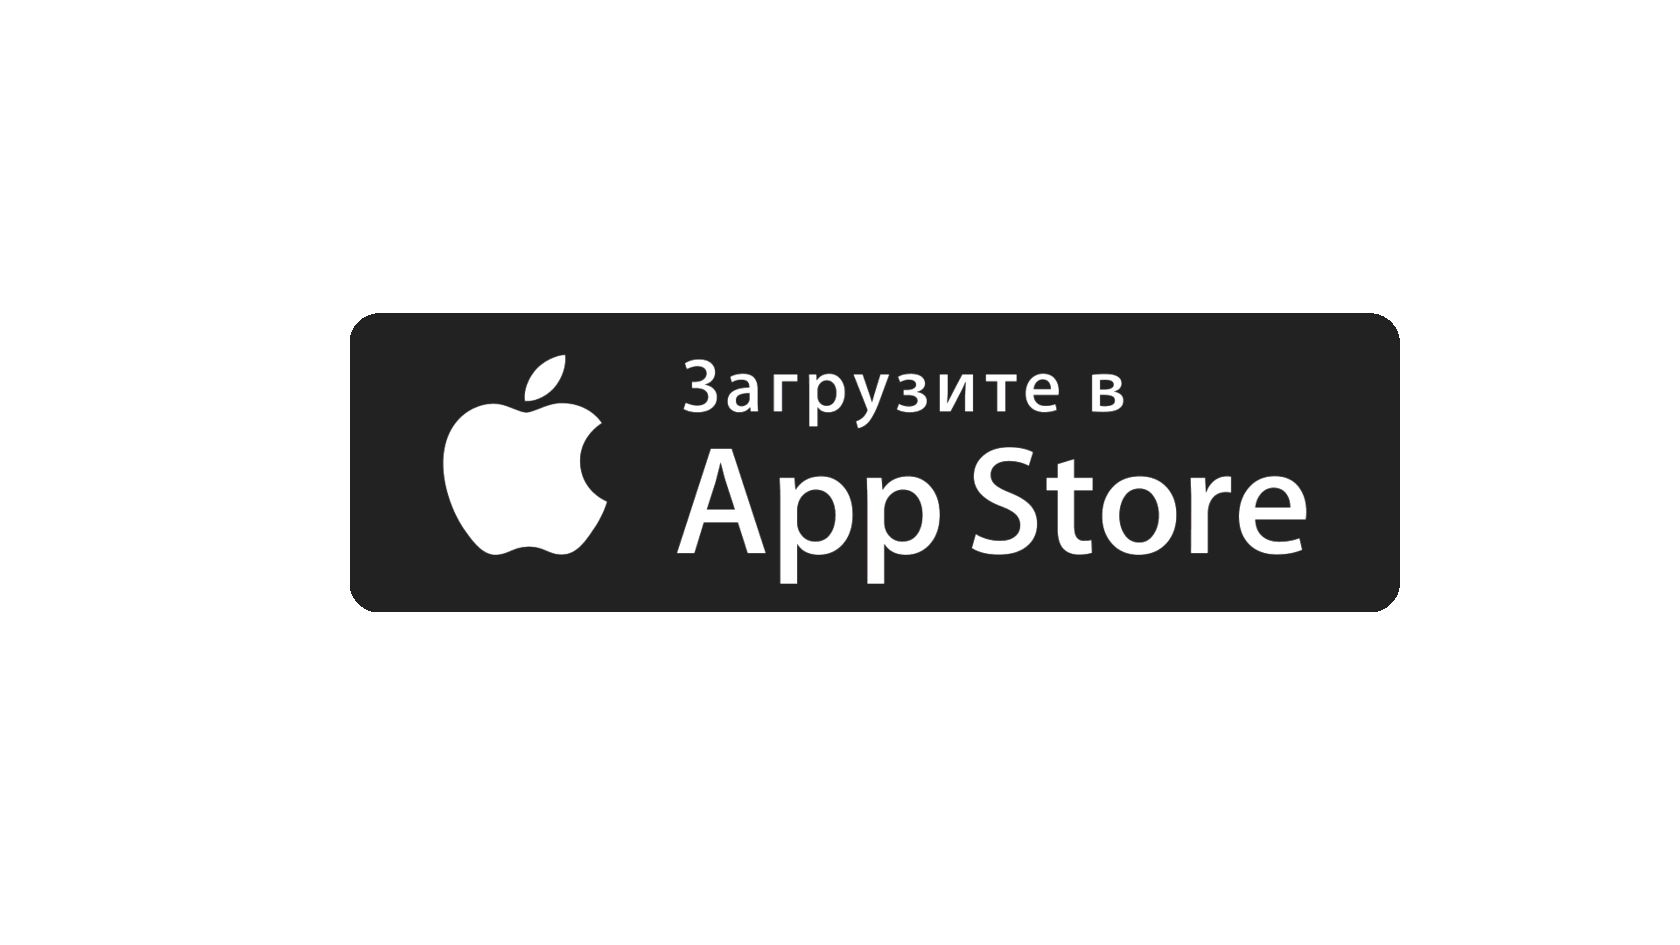 Using app store. Иконка app Store. Загрузите в app Store. Значок доступно в app Store. Эпл сторе и гугл плей.